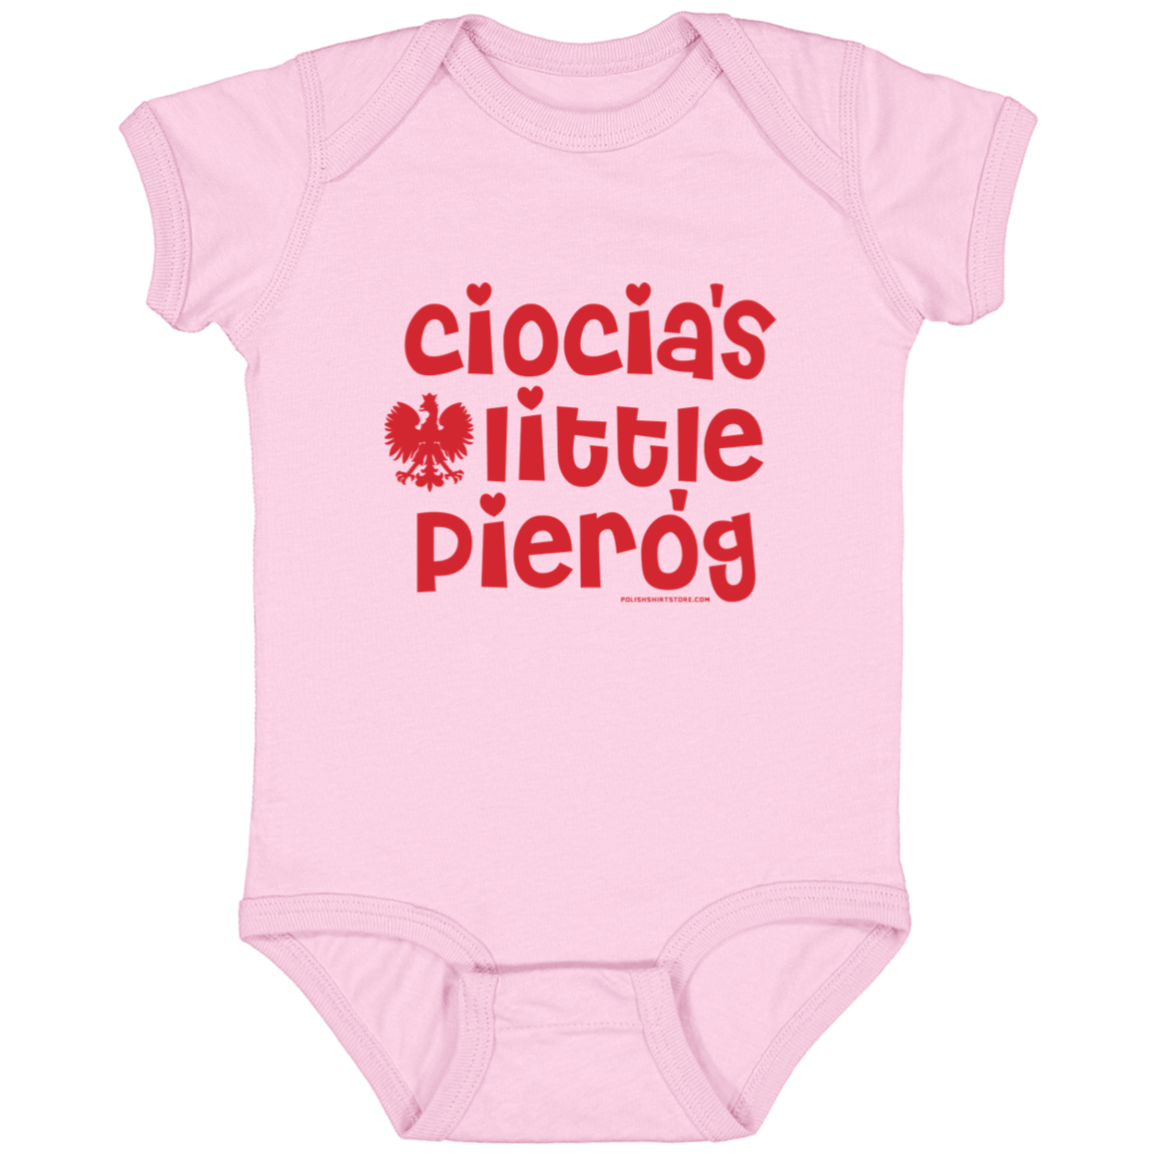 Ciocia's Little Pierogi Infant Bodysuit Baby CustomCat Pink Newborn 